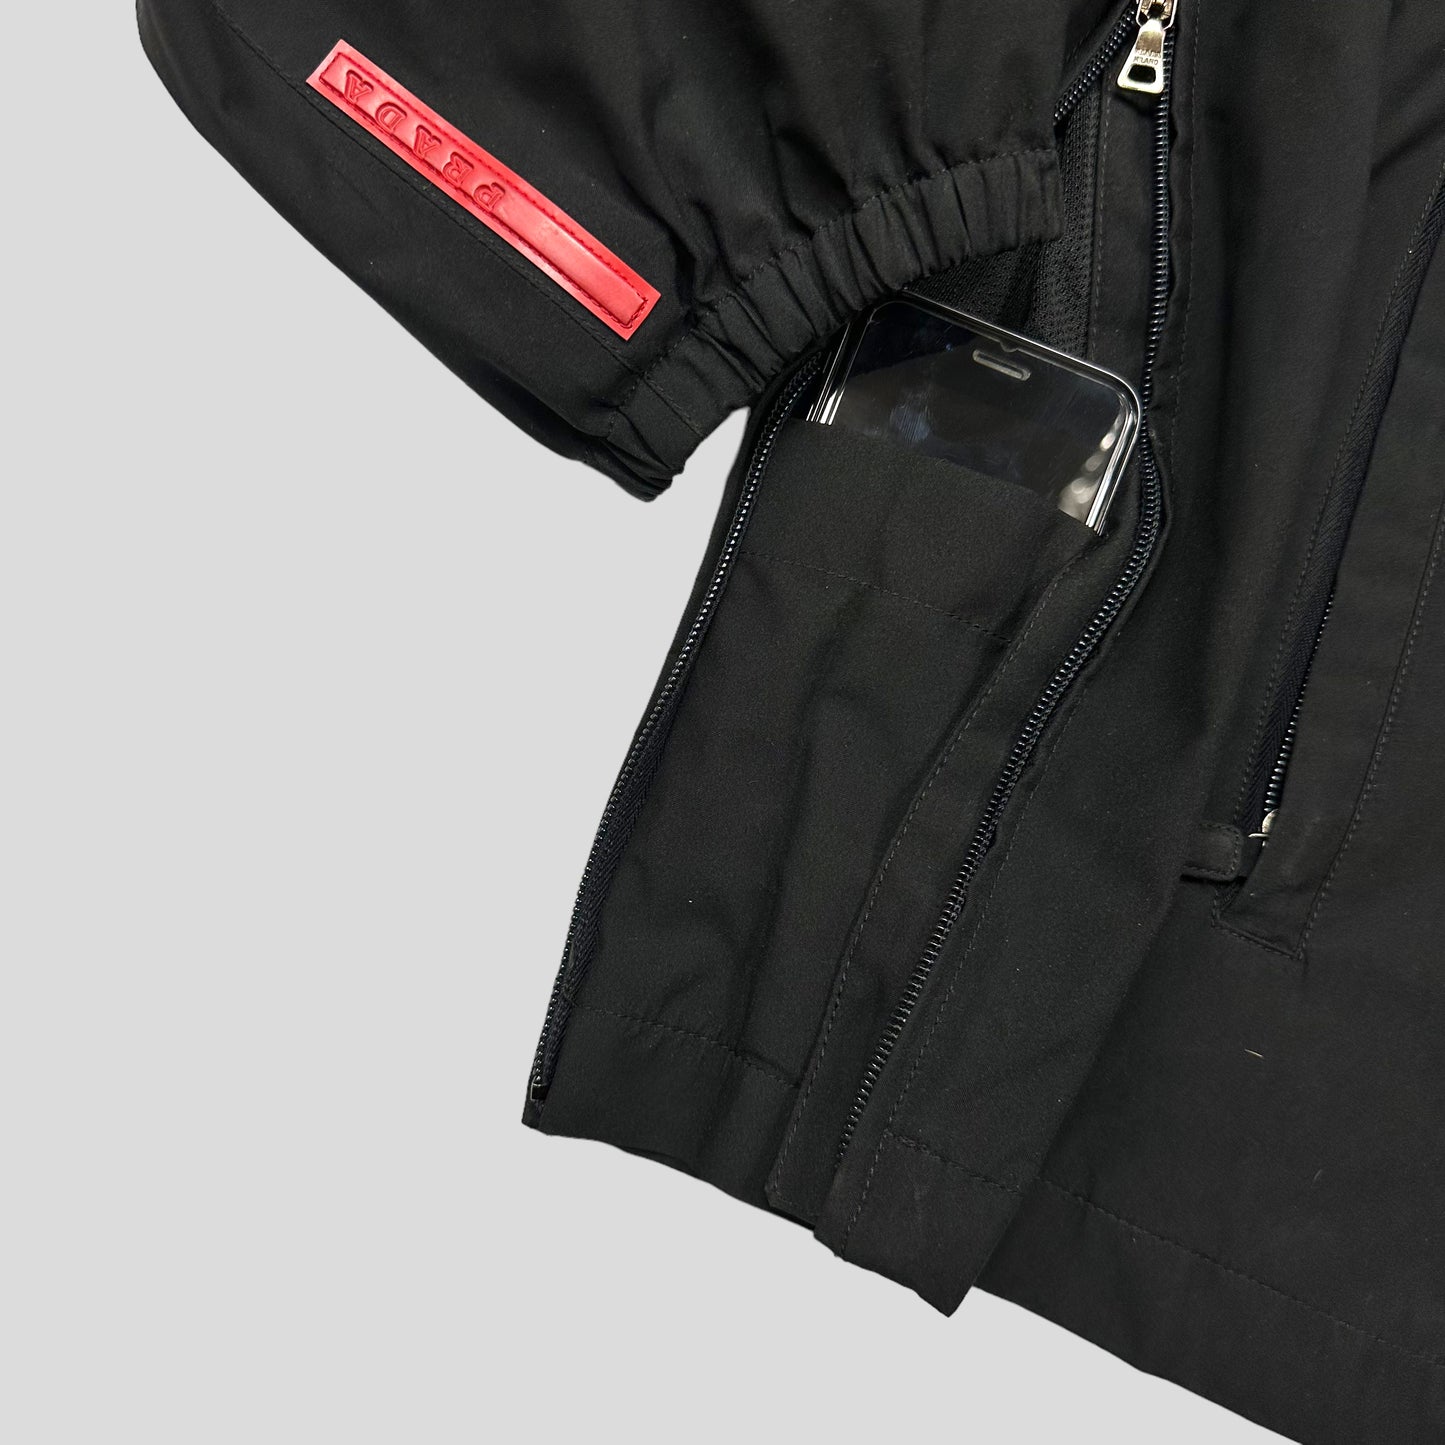 Prada Sport SS01 Goretex Jacket with Nylon Pocket Hood - XL/XXL